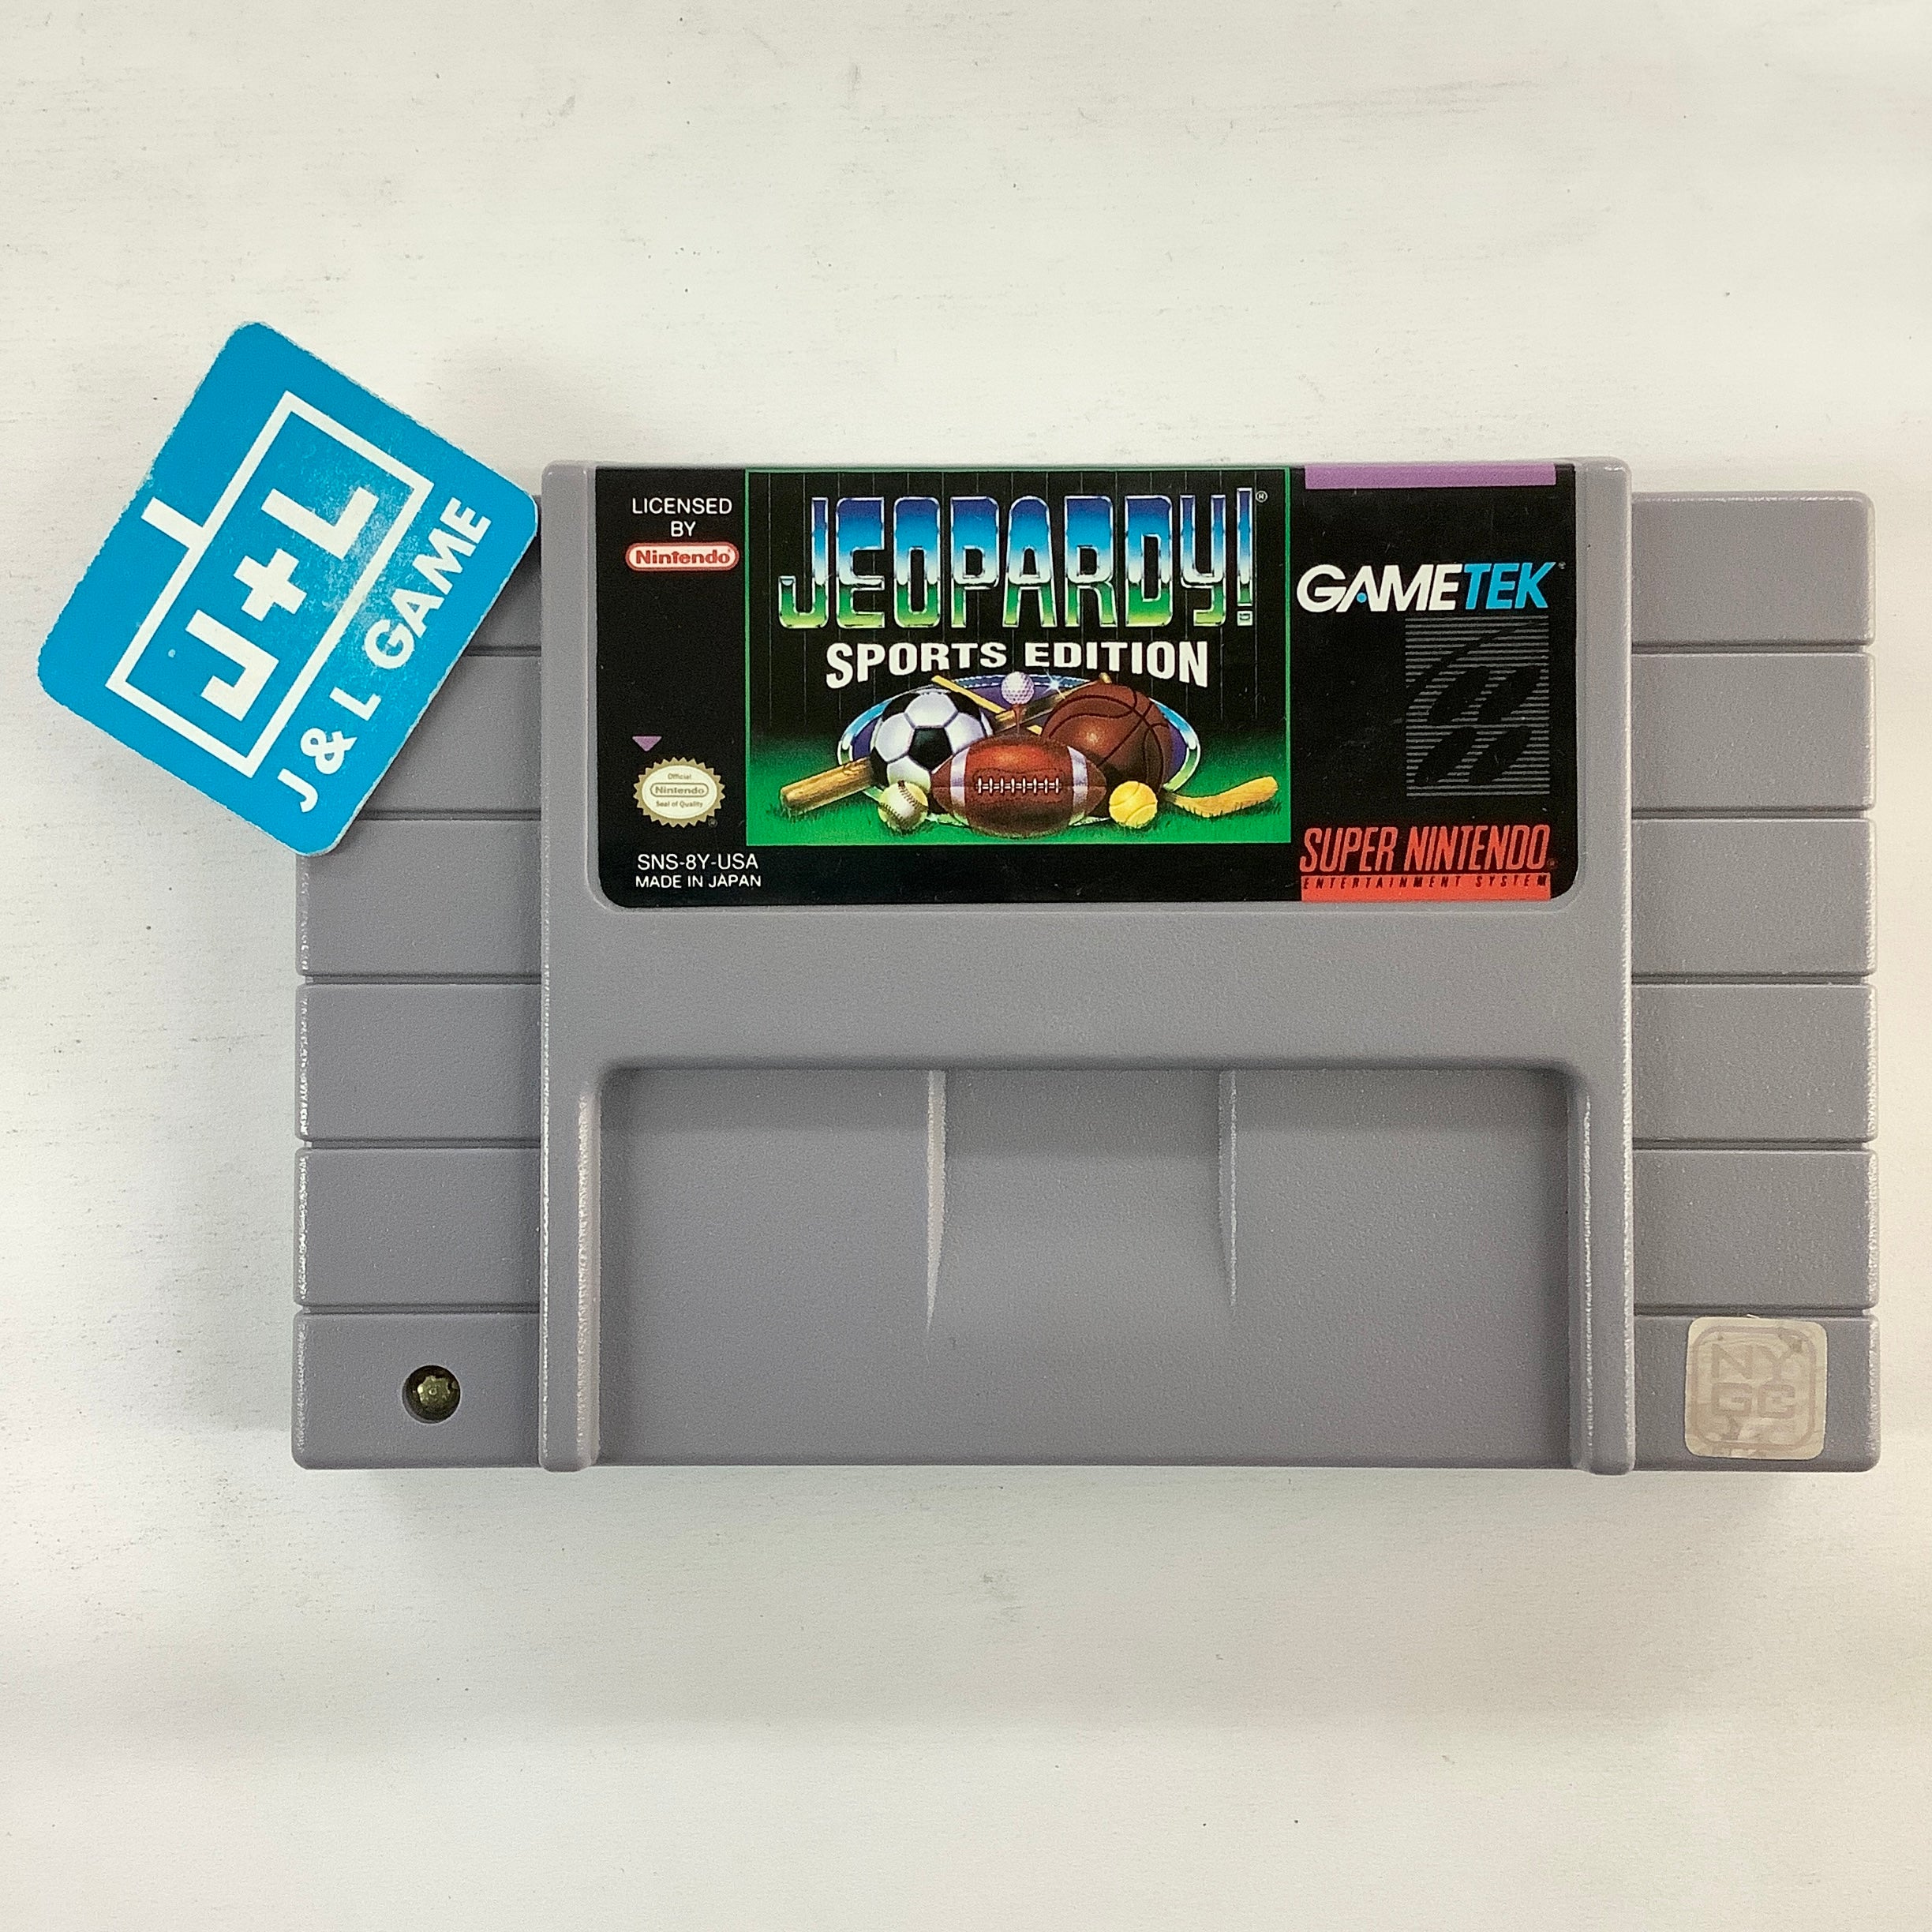 Jeopardy! Sports Edition - (SNES) Super Nintendo [Pre-Owned] Video Games GameTek   